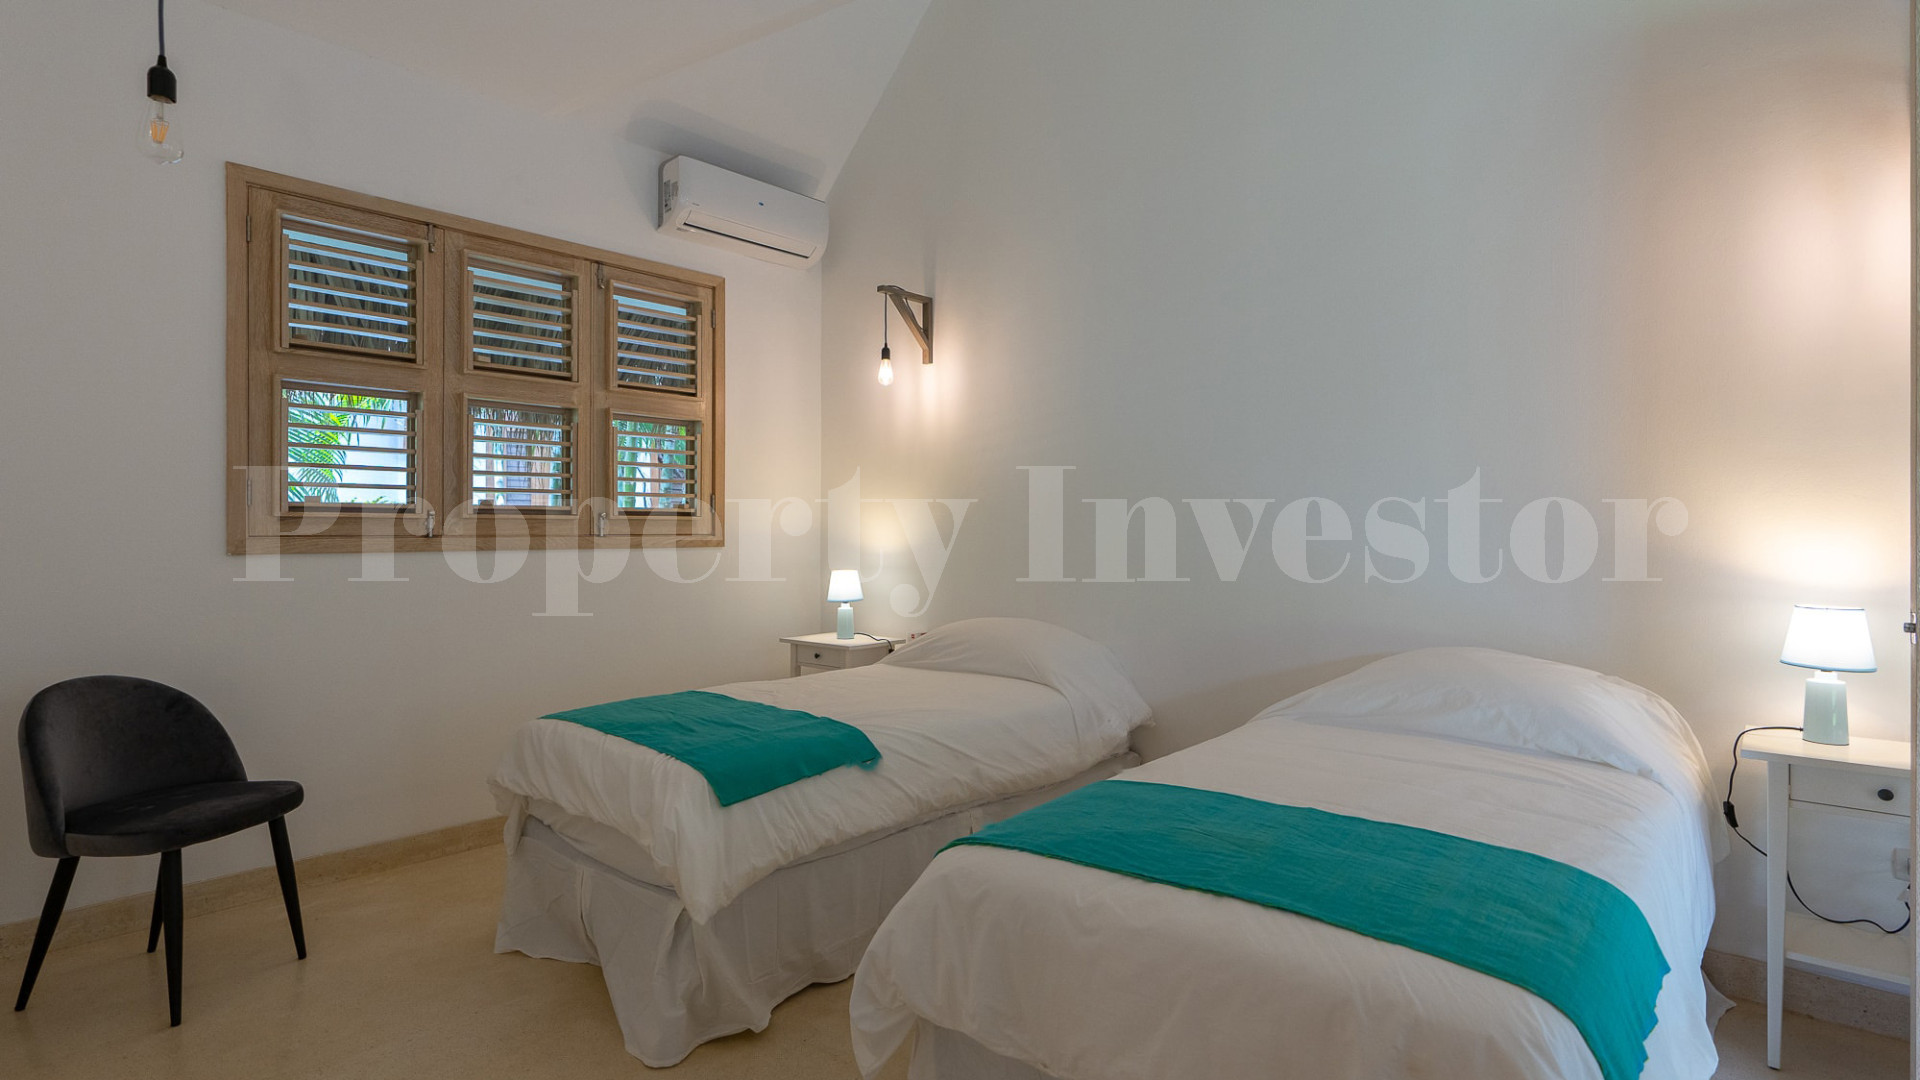 Beautiful 5 Bedroom Luxury Beachfront Villa for Sale at Playa Coson, Las Terrenas